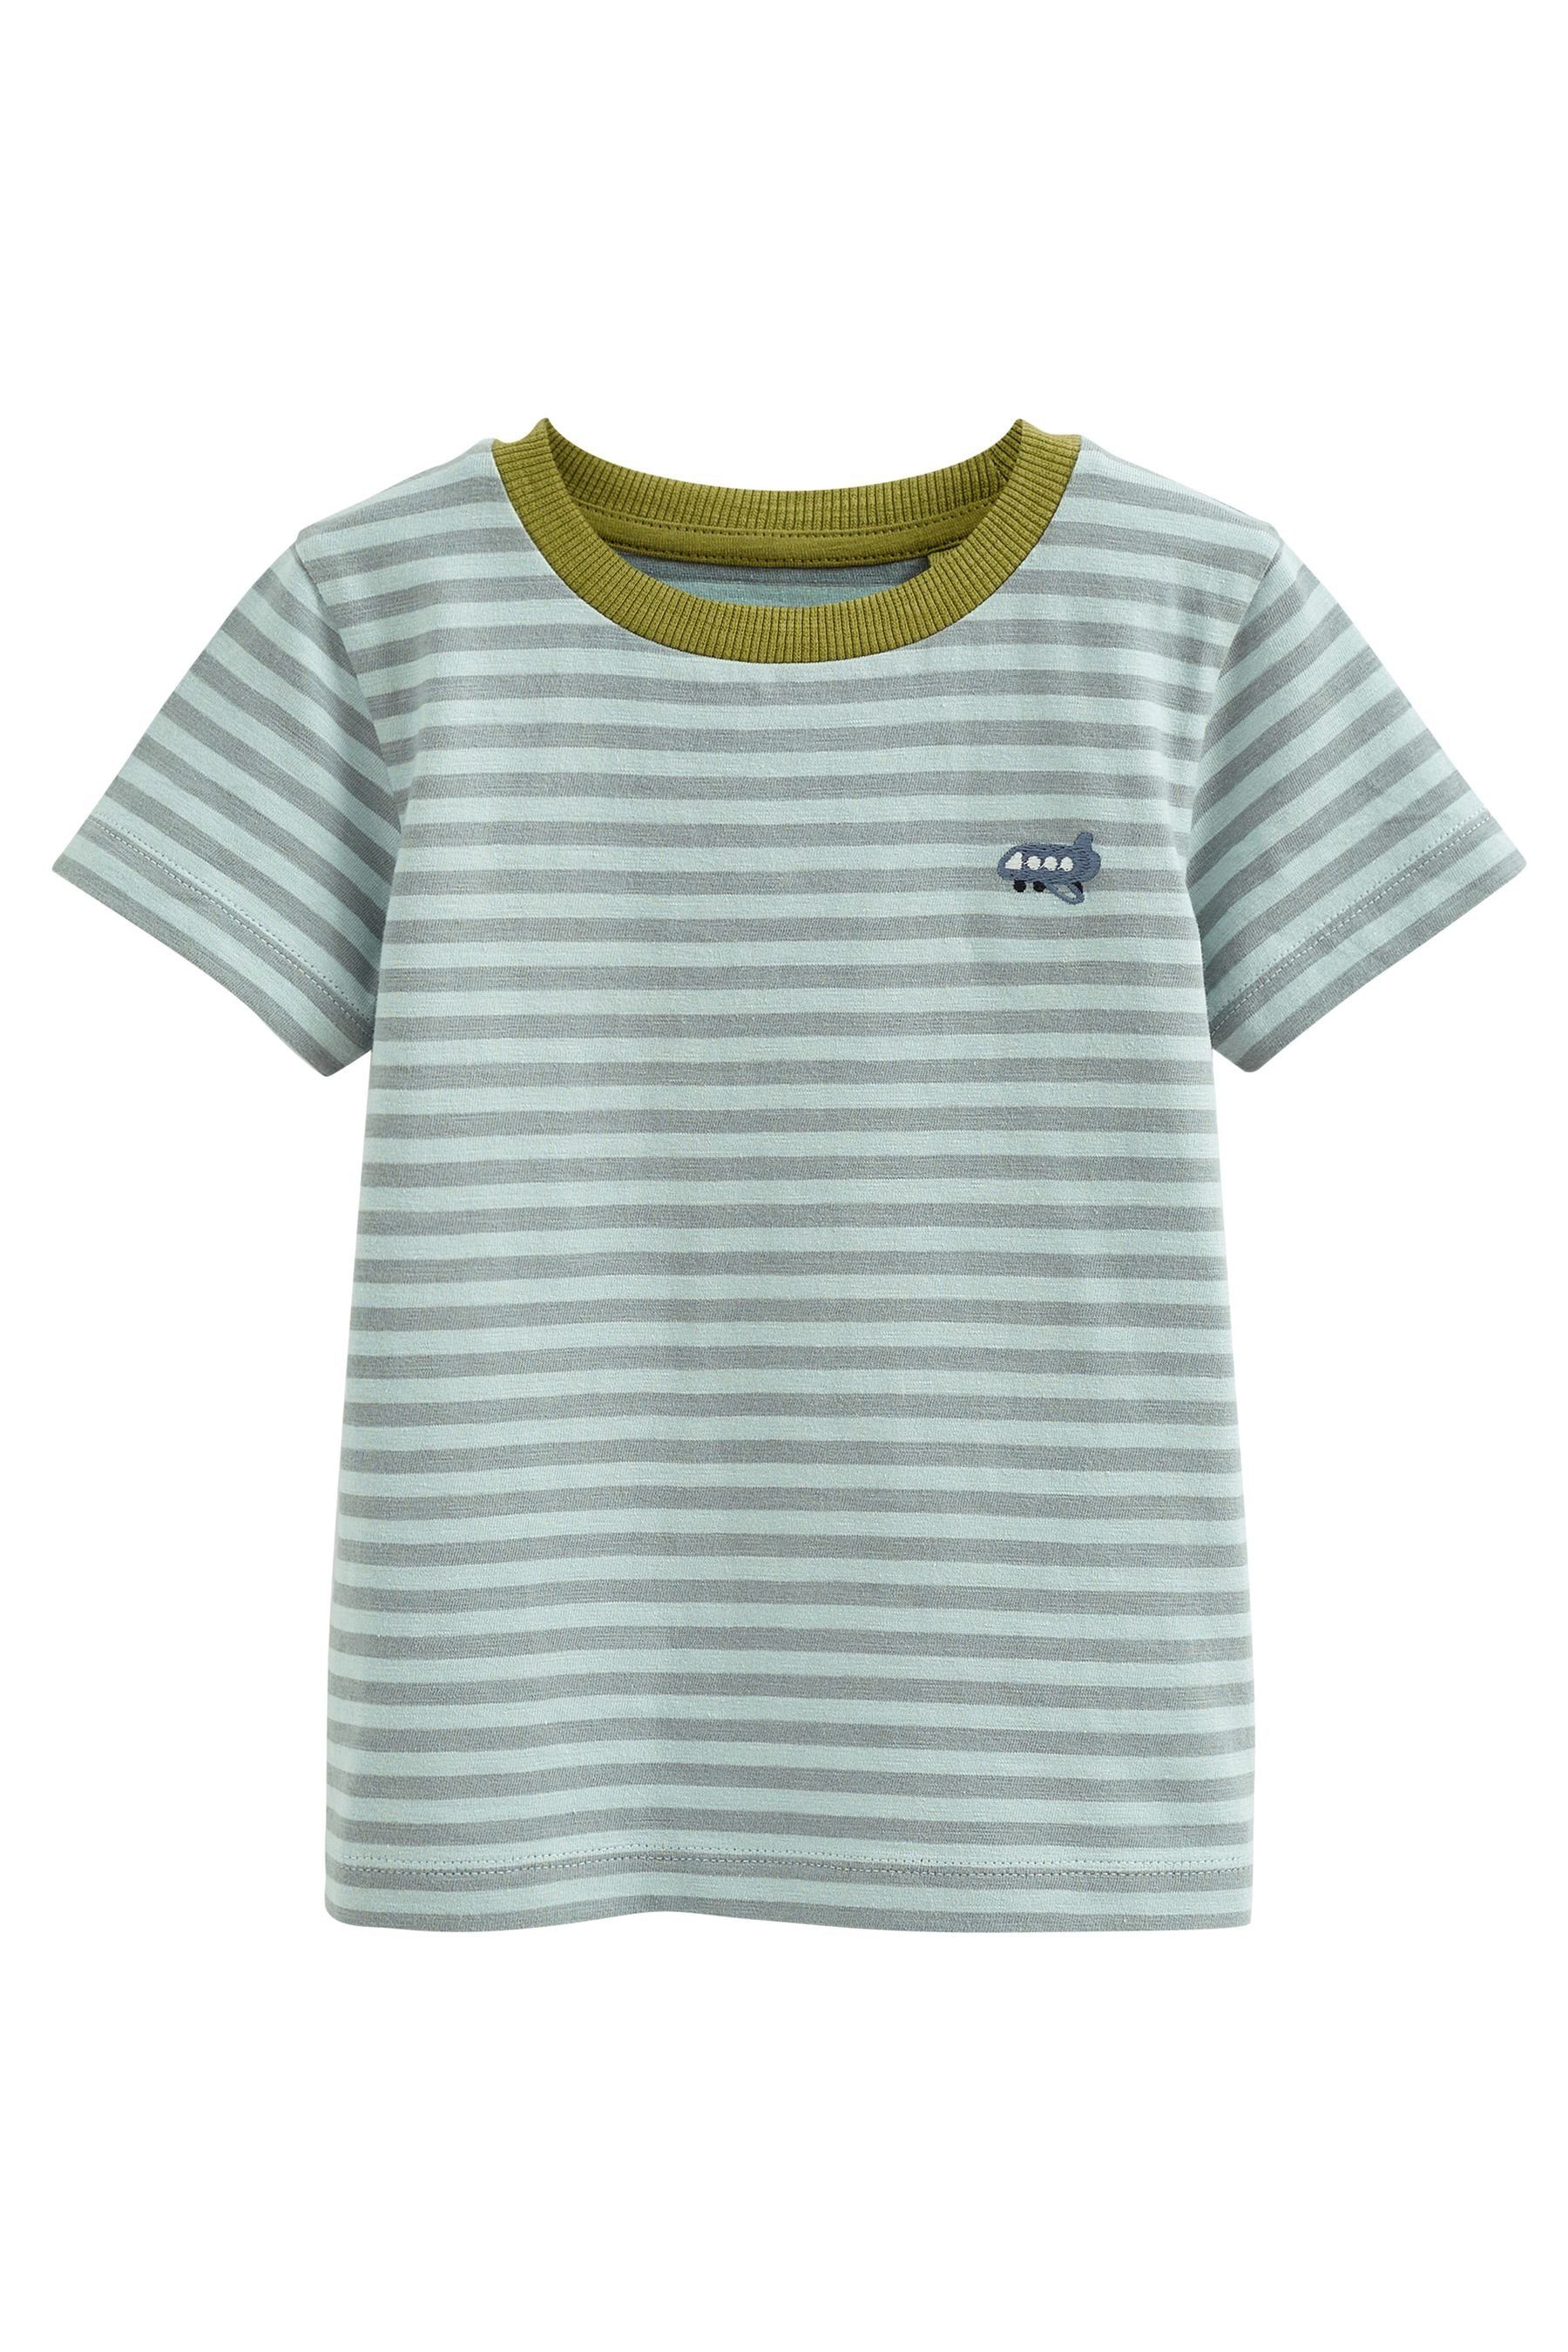 T-Shirt 5er-Pack T-Shirts, Green/Blue (5-tlg) Next Kurzärmelige Stripe